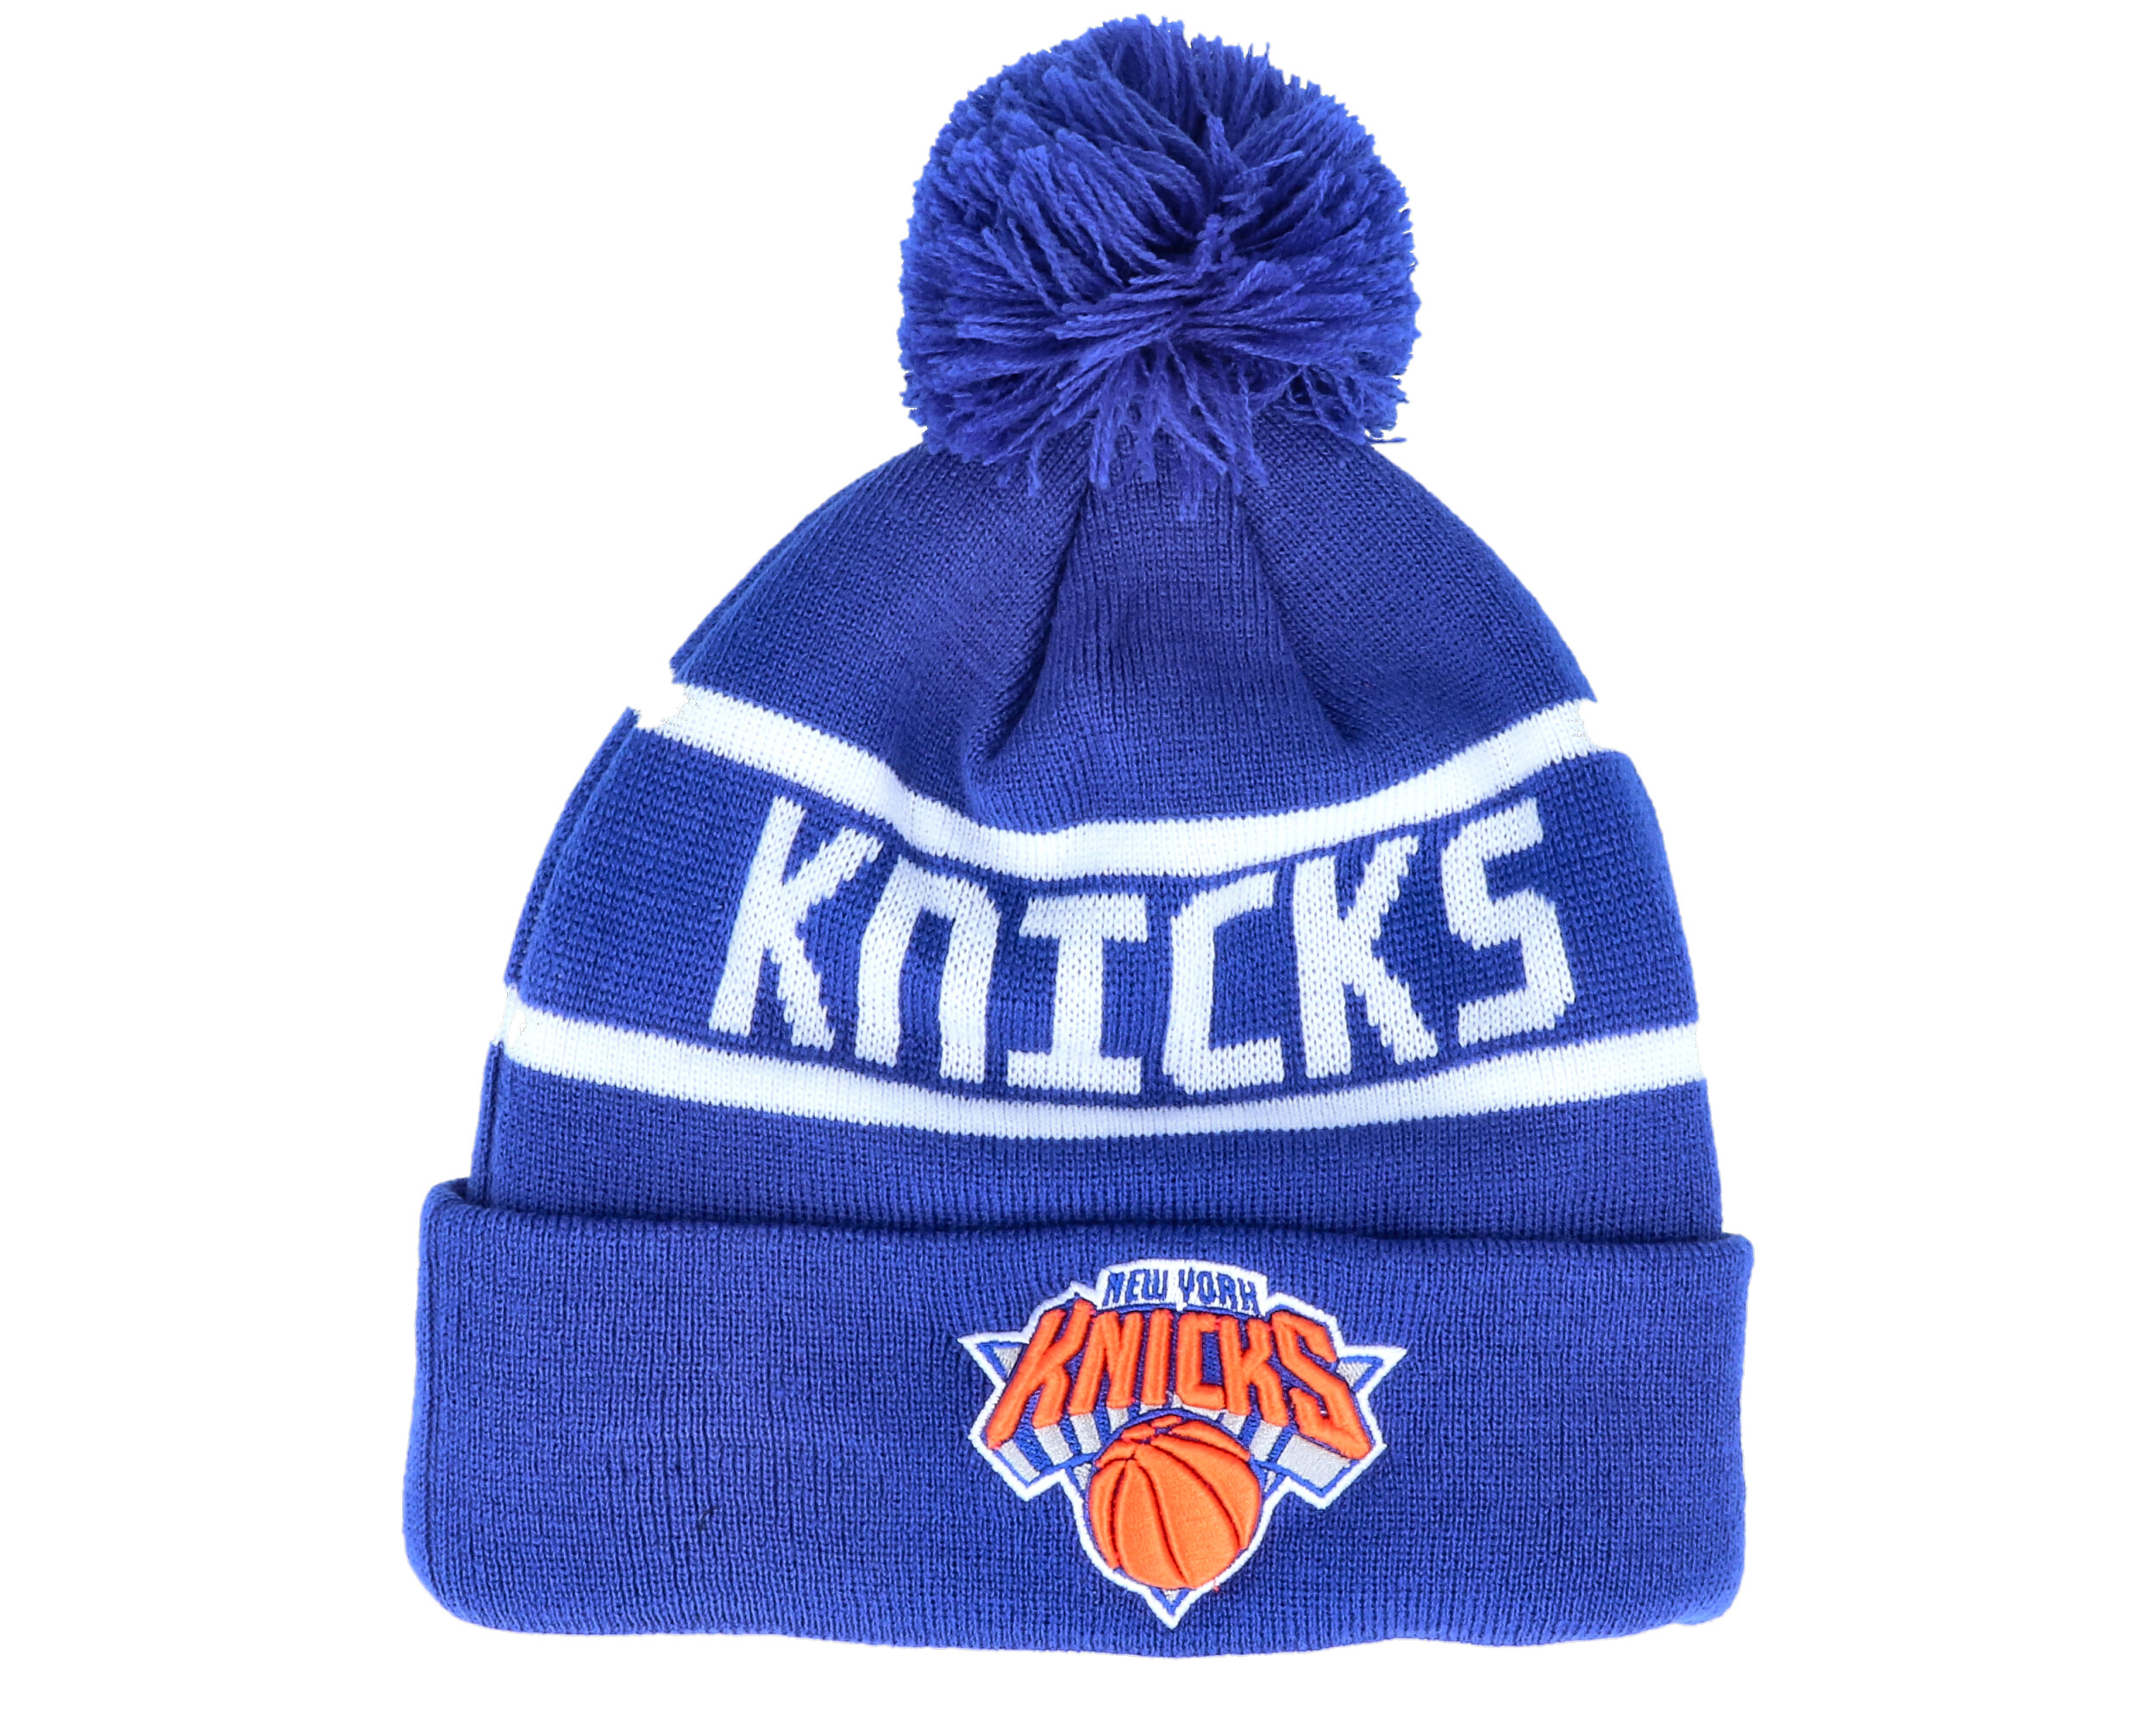 ik luister naar muziek Obsessie Leidinggevende New York Knicks Team Jake Bobble Cuff Blue Pom - New Era muts | Hatstore.nl